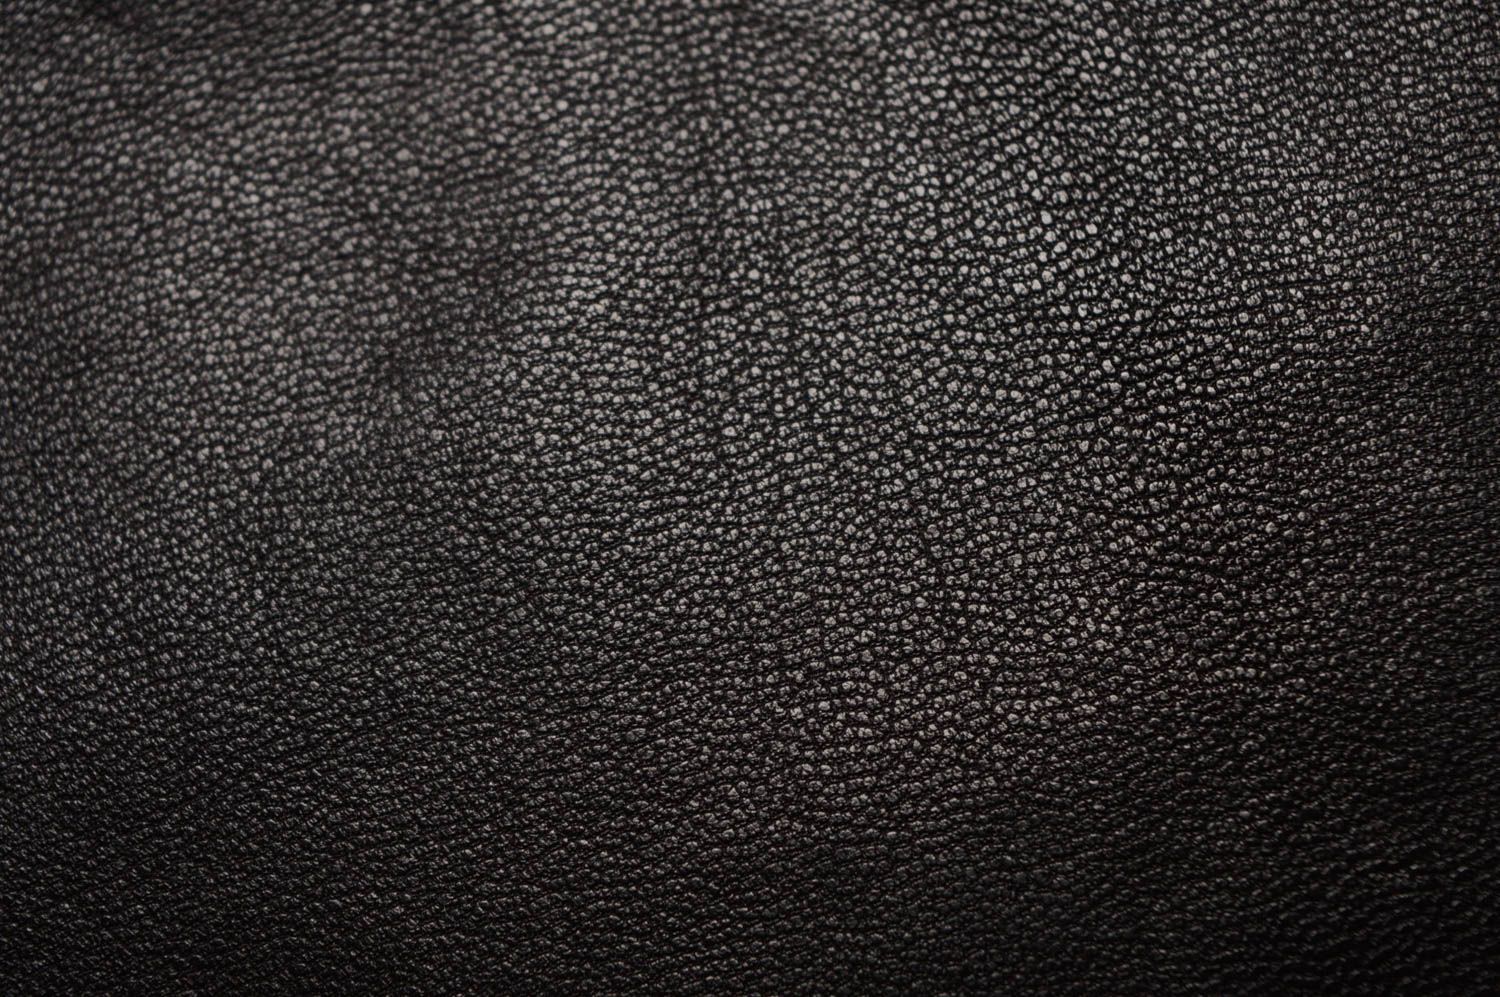 Black leather clutch photo 4